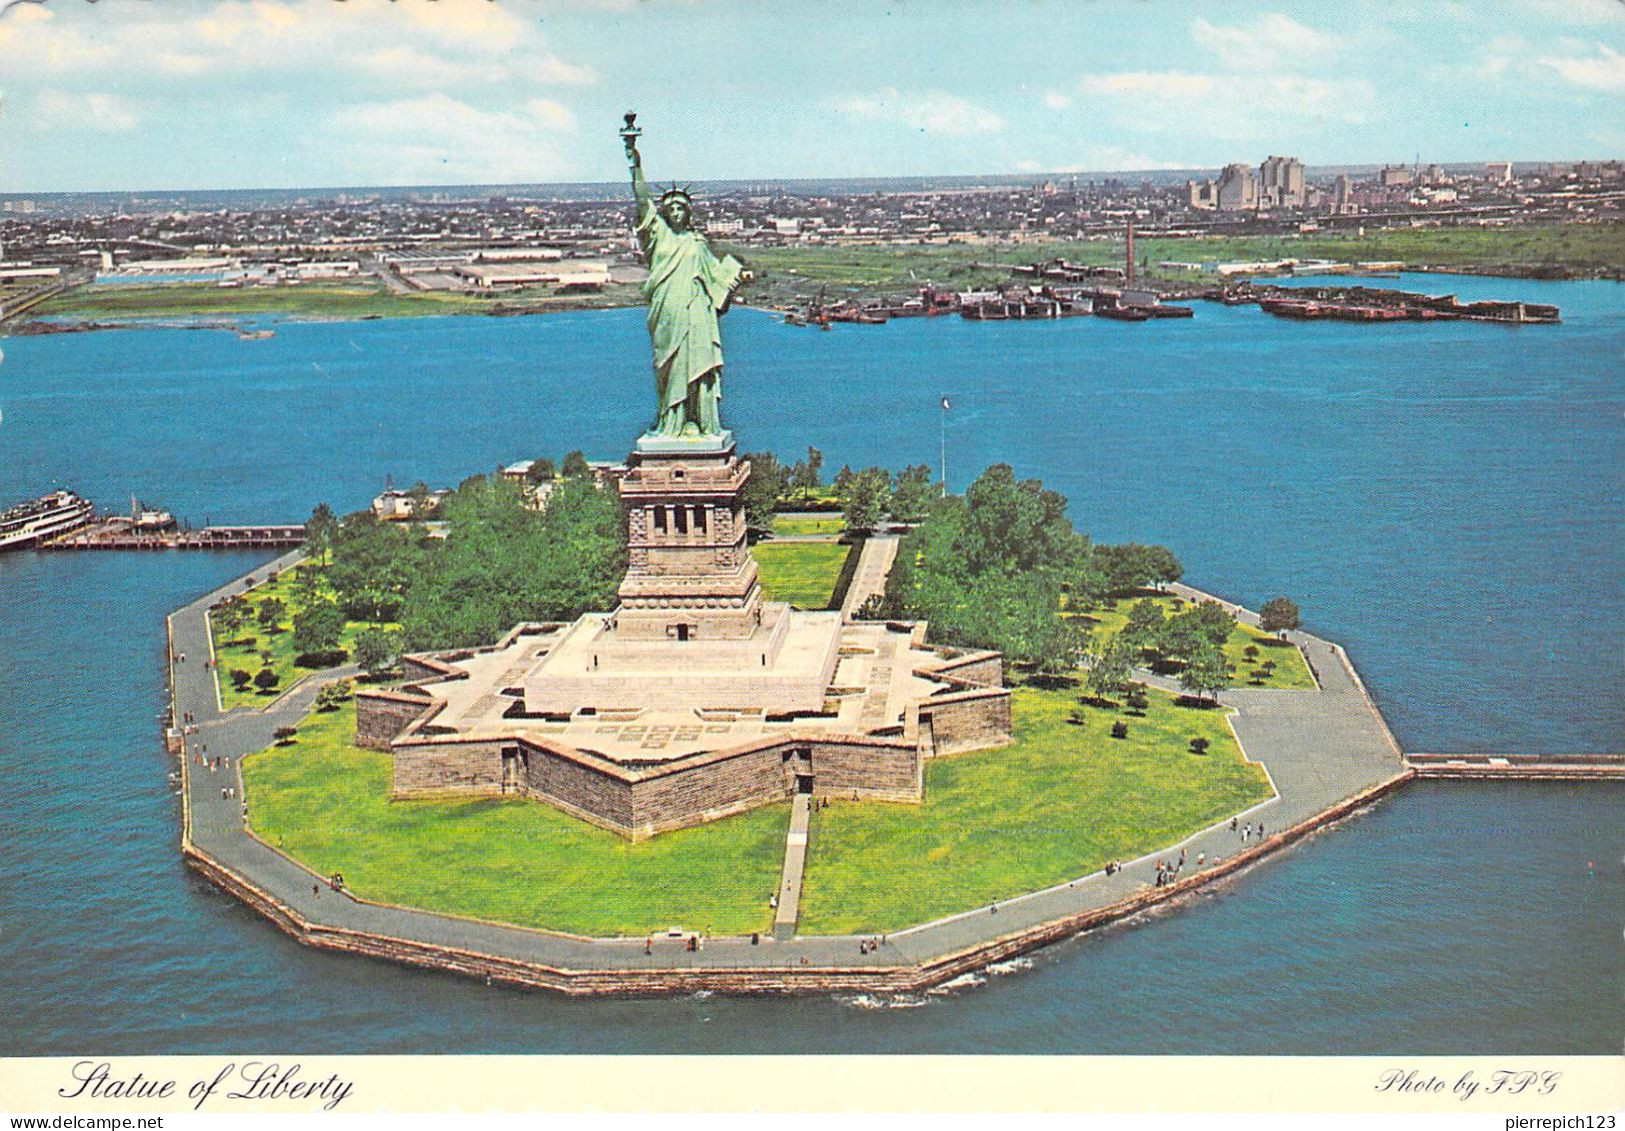 New York - Statue De La Liberté - Statue De La Liberté